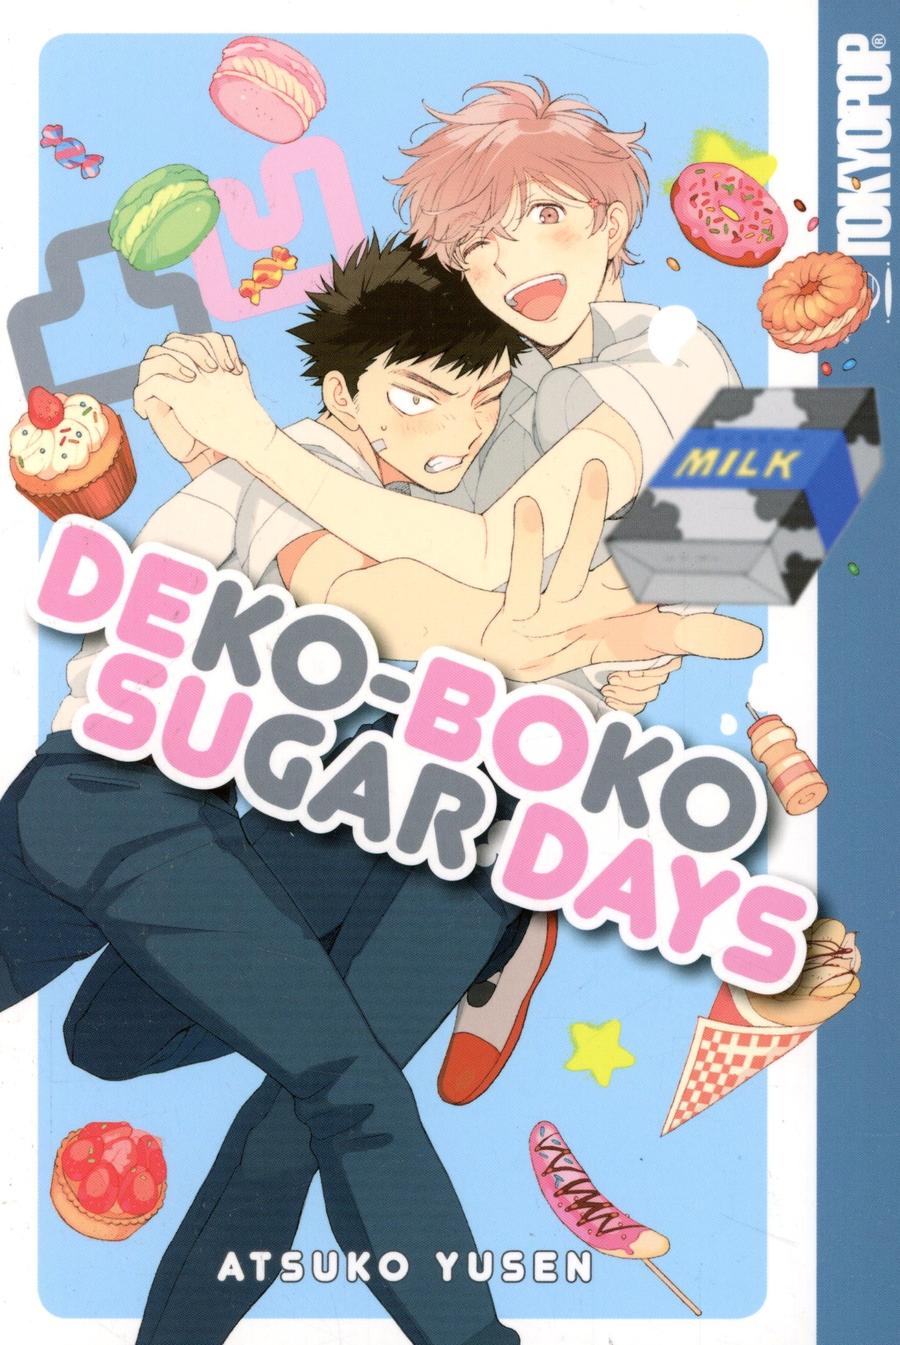 Dekoboko Sugar Days GN